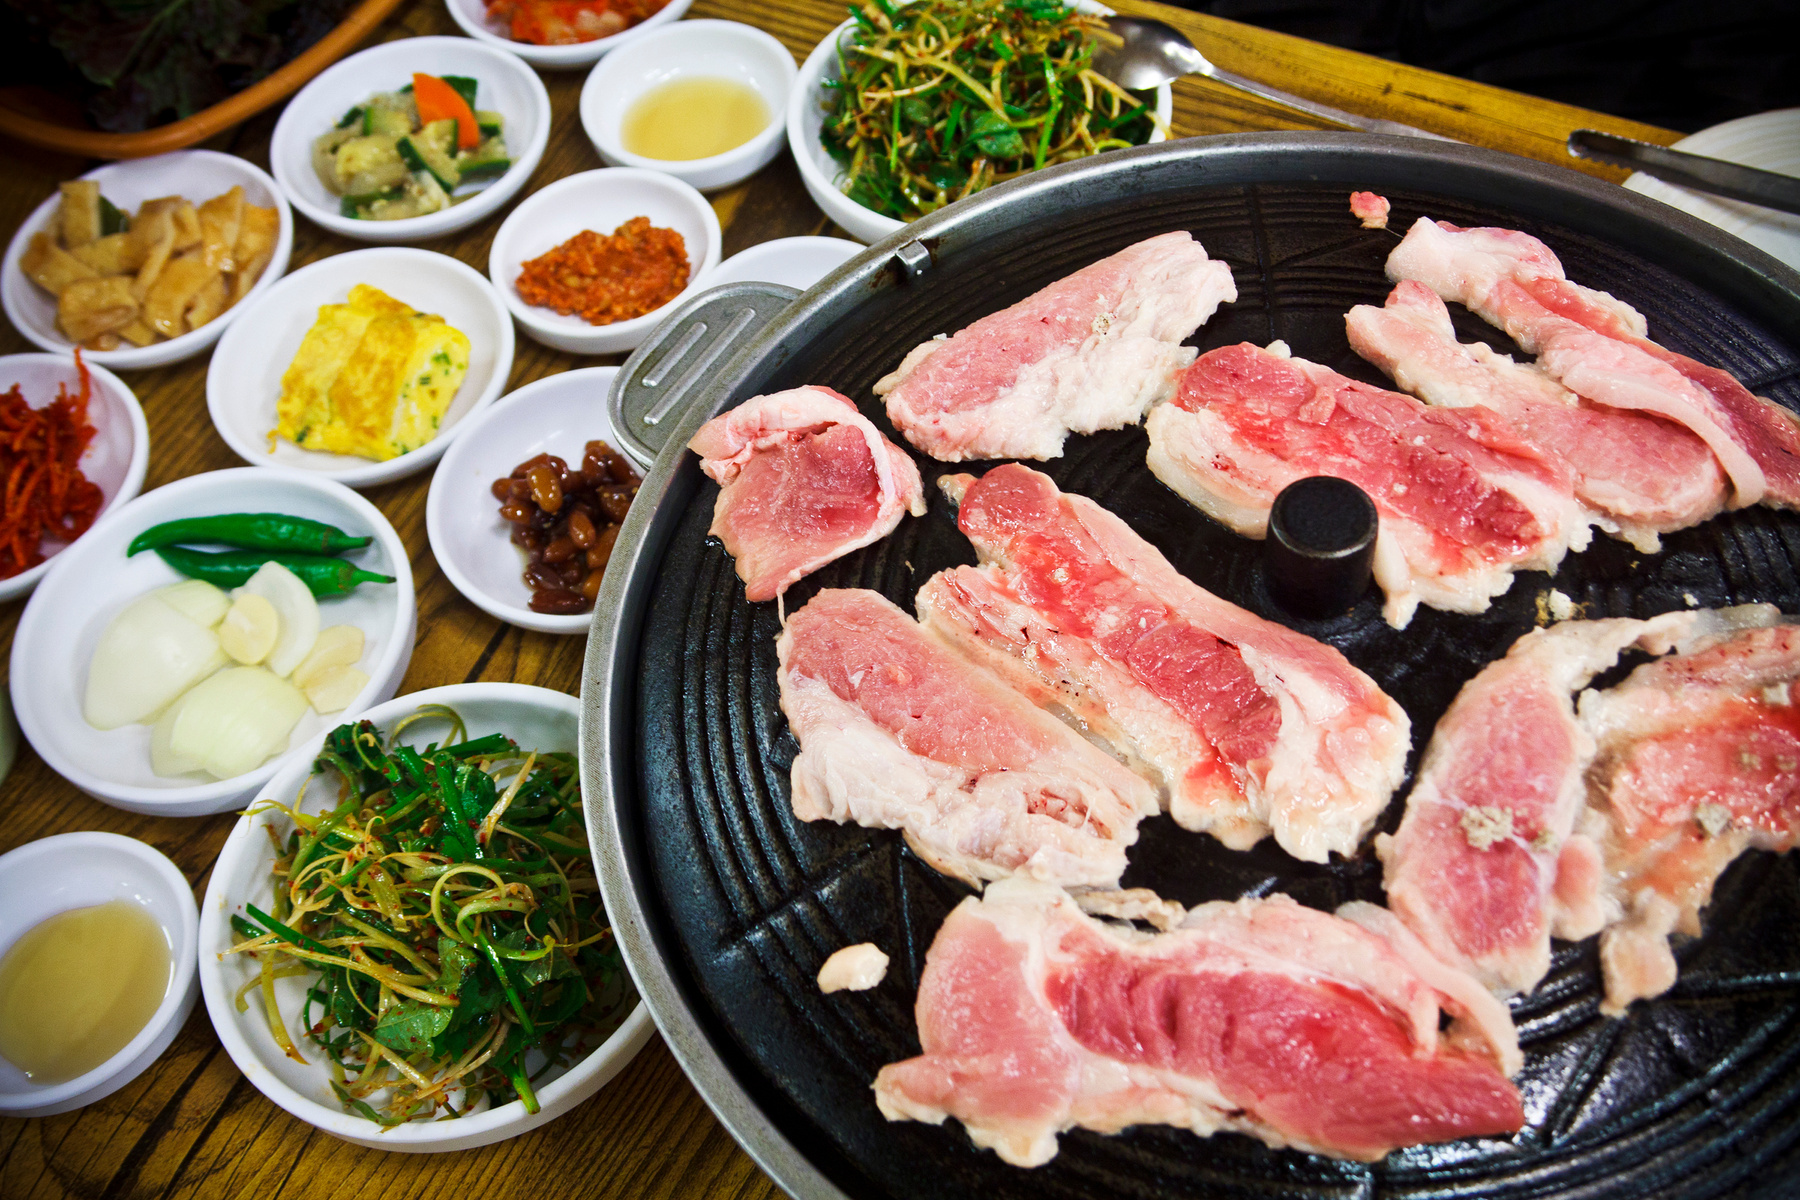 Korean BBQ pork and banchan